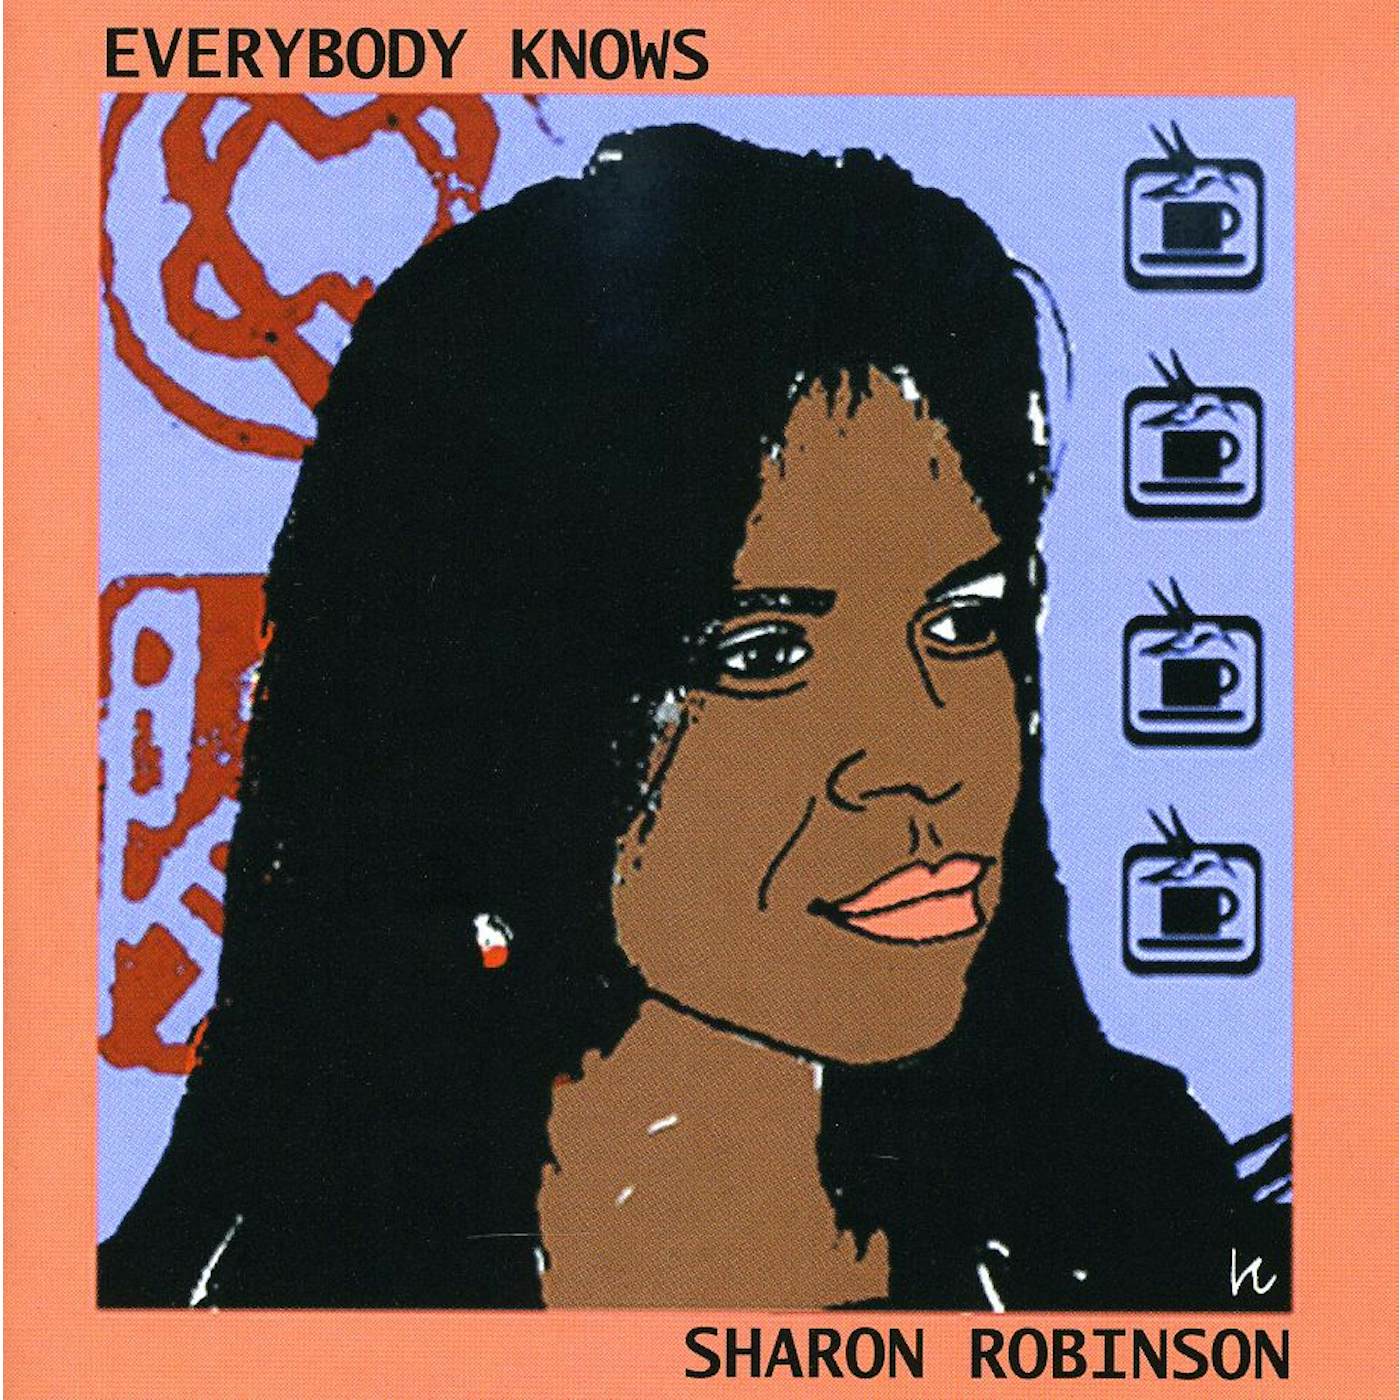 Sharon Robinson EVERYBODY KNOWS CD